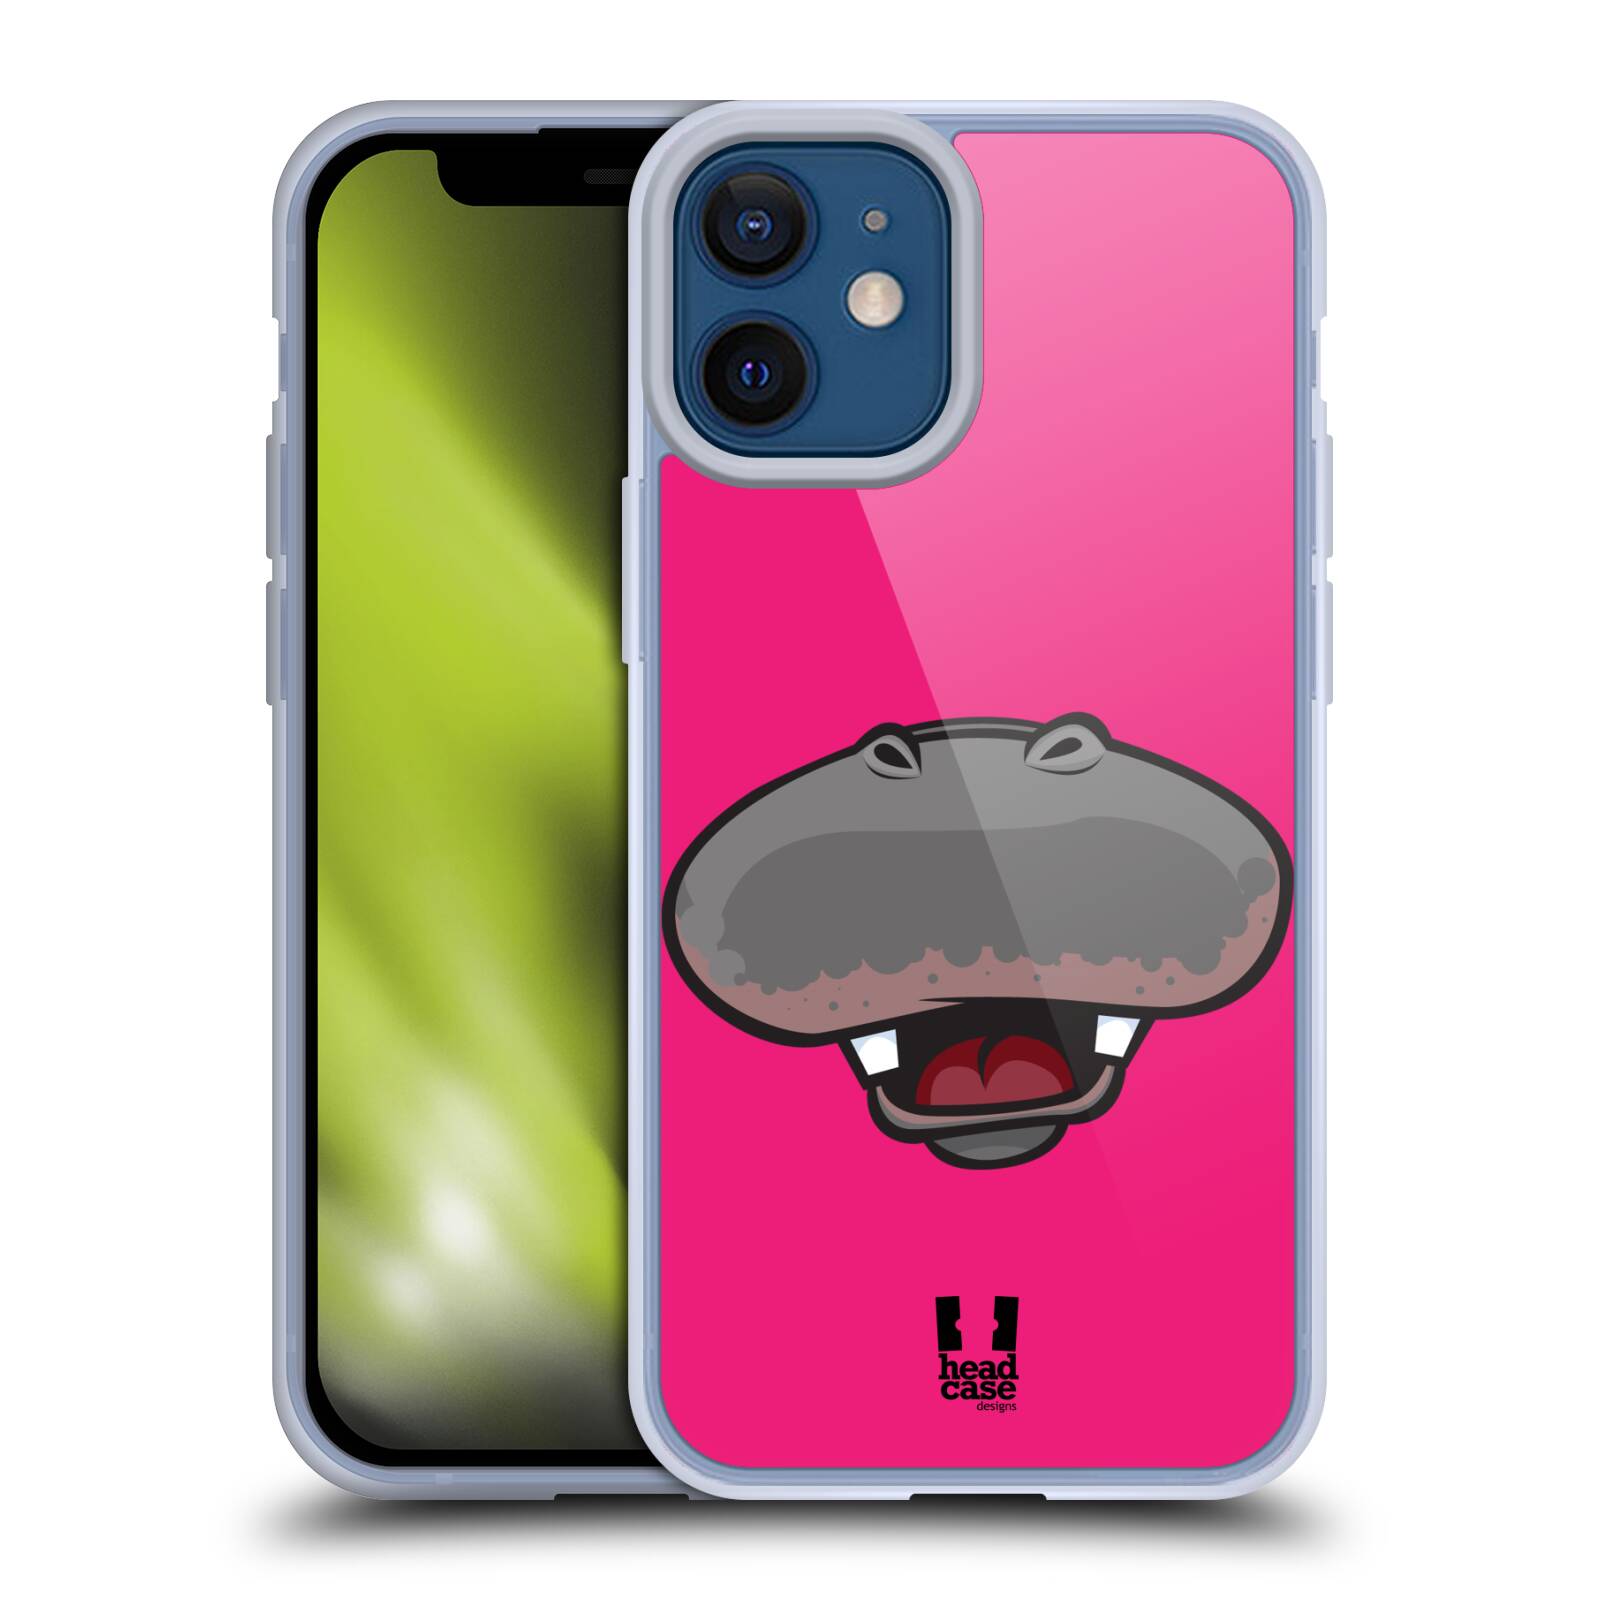 Plastový obal na mobil Apple Iphone 12 MINI vzor Zvířecí úsměv hroch růžová